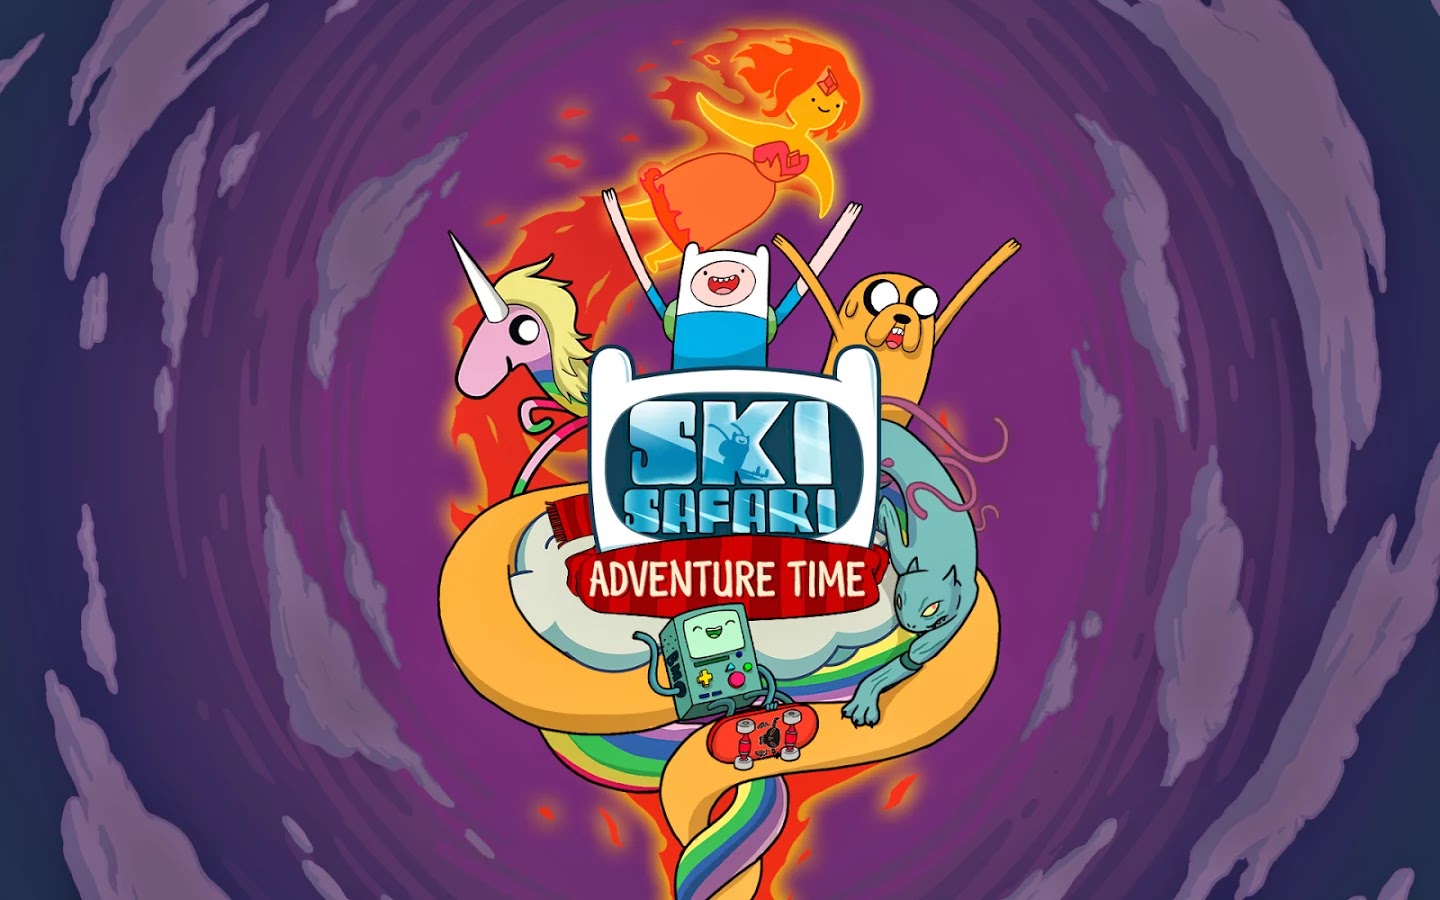 download ski safari adventure time mod apk